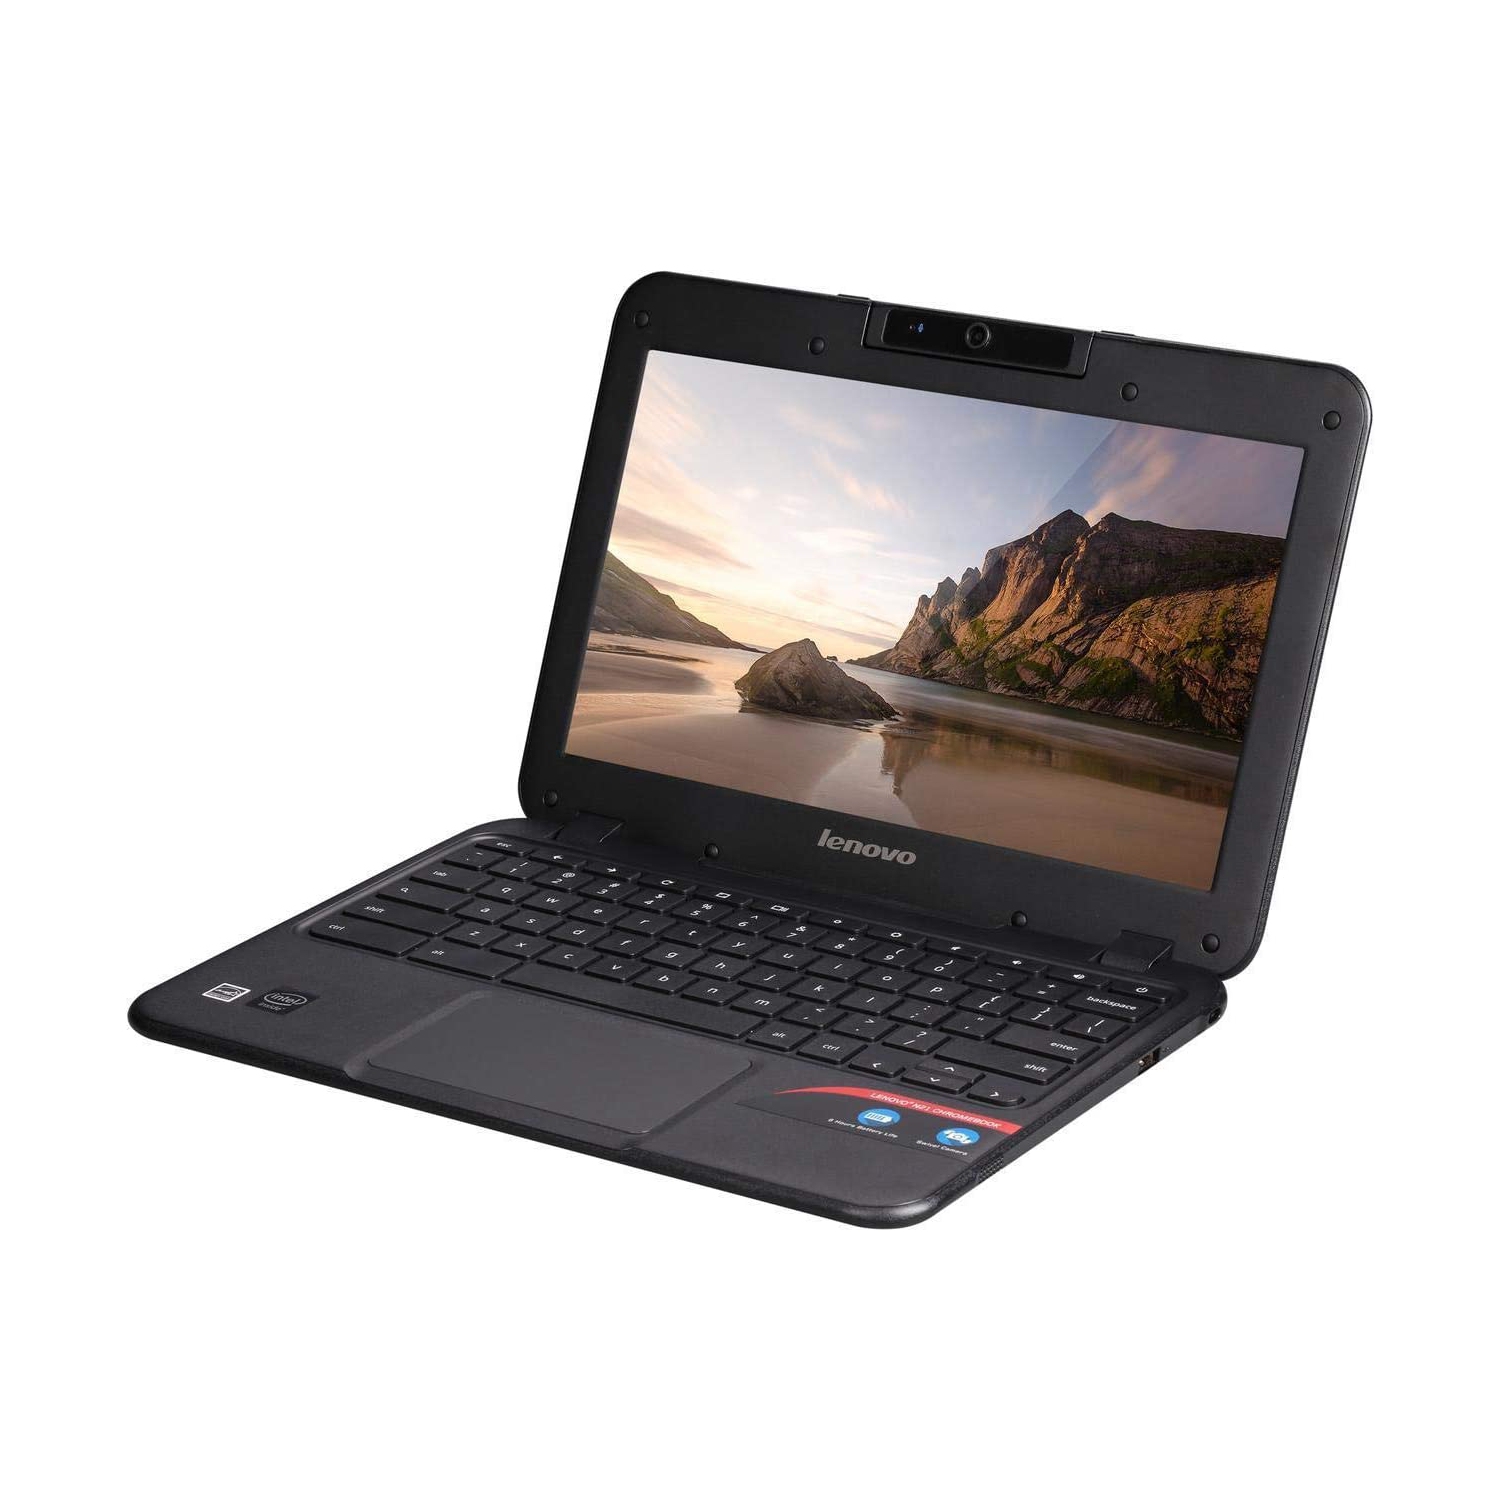 Refurbished (Excellent) - Lenovo Chromebook N21 11.6" (Intel Celeron / 4GB RAM / 16GB SSD) US QWERTY Keyboard